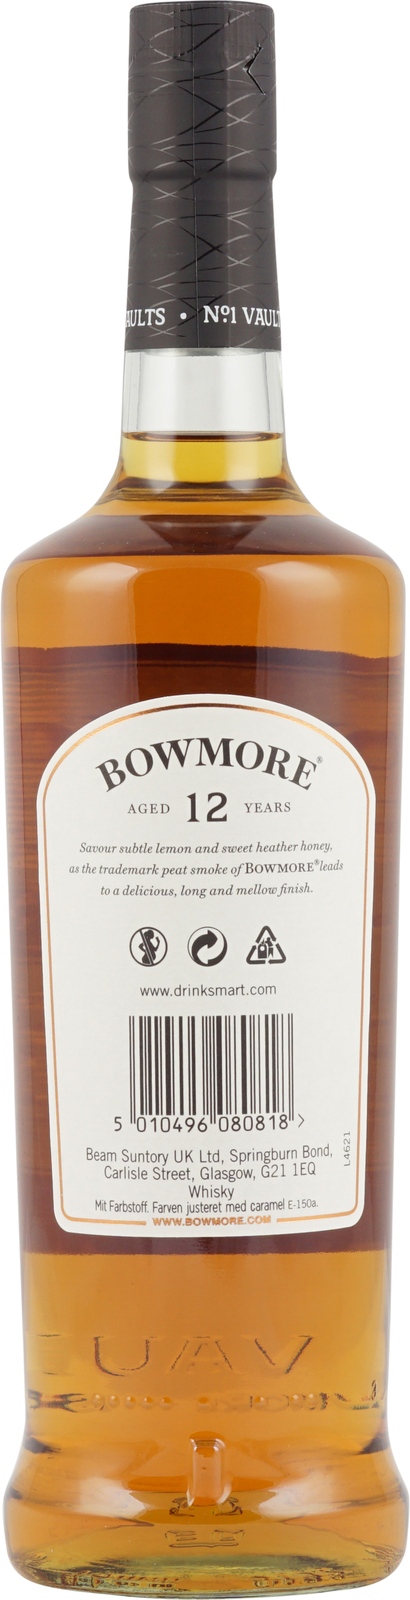 Bowmore Islay Single Malt Whisky (12 Jahre) 0,7 Liter i